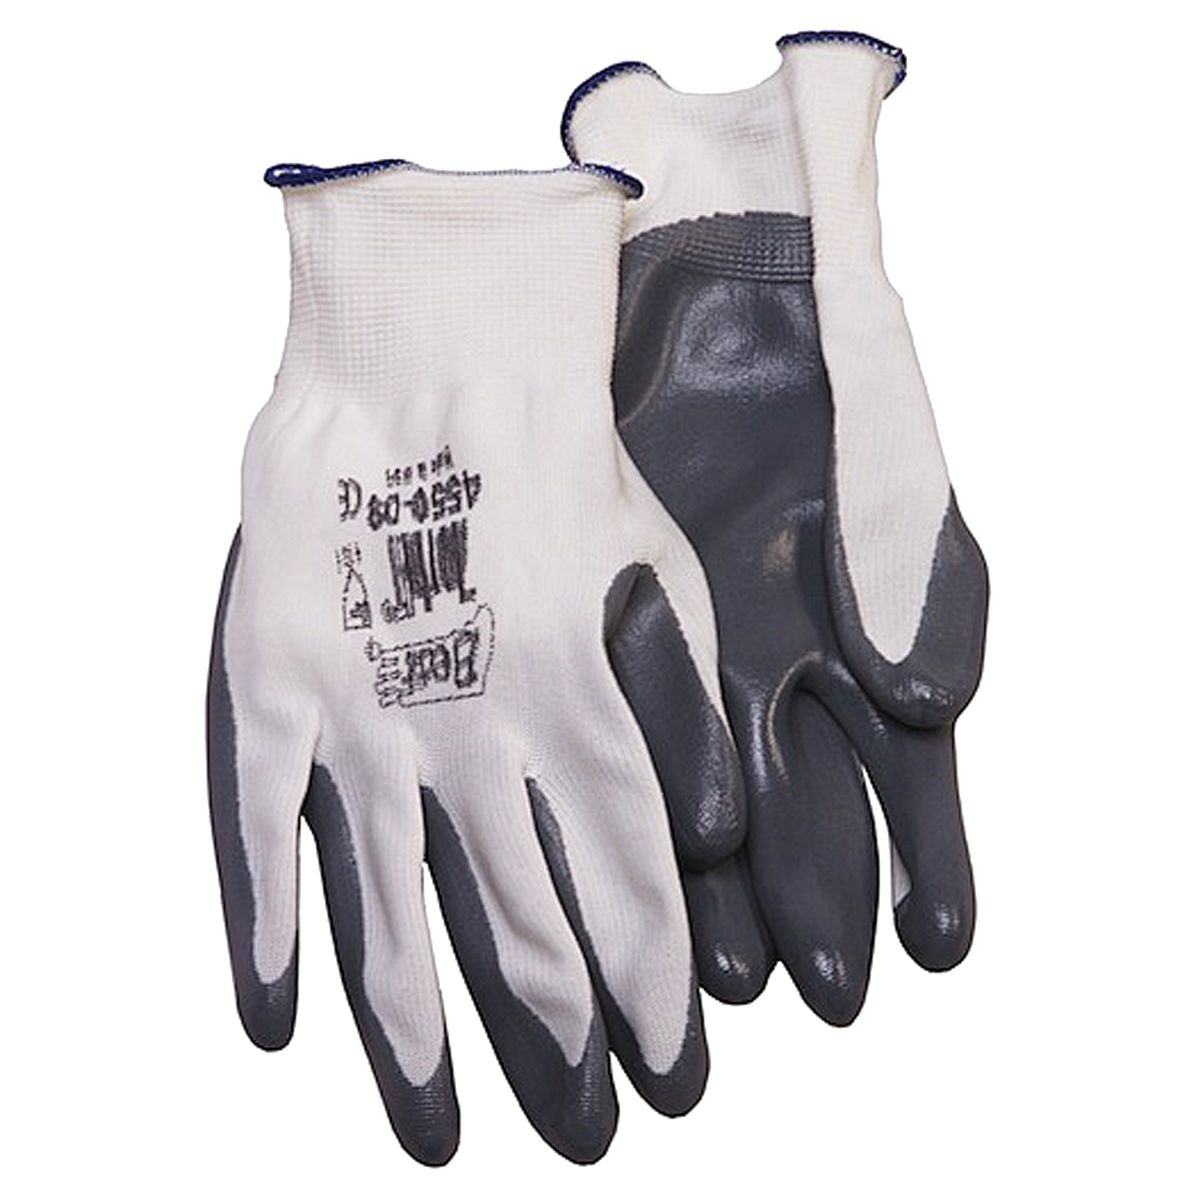 Zorb-IT® Gloves — Nitrile Palm Coating, X-Large